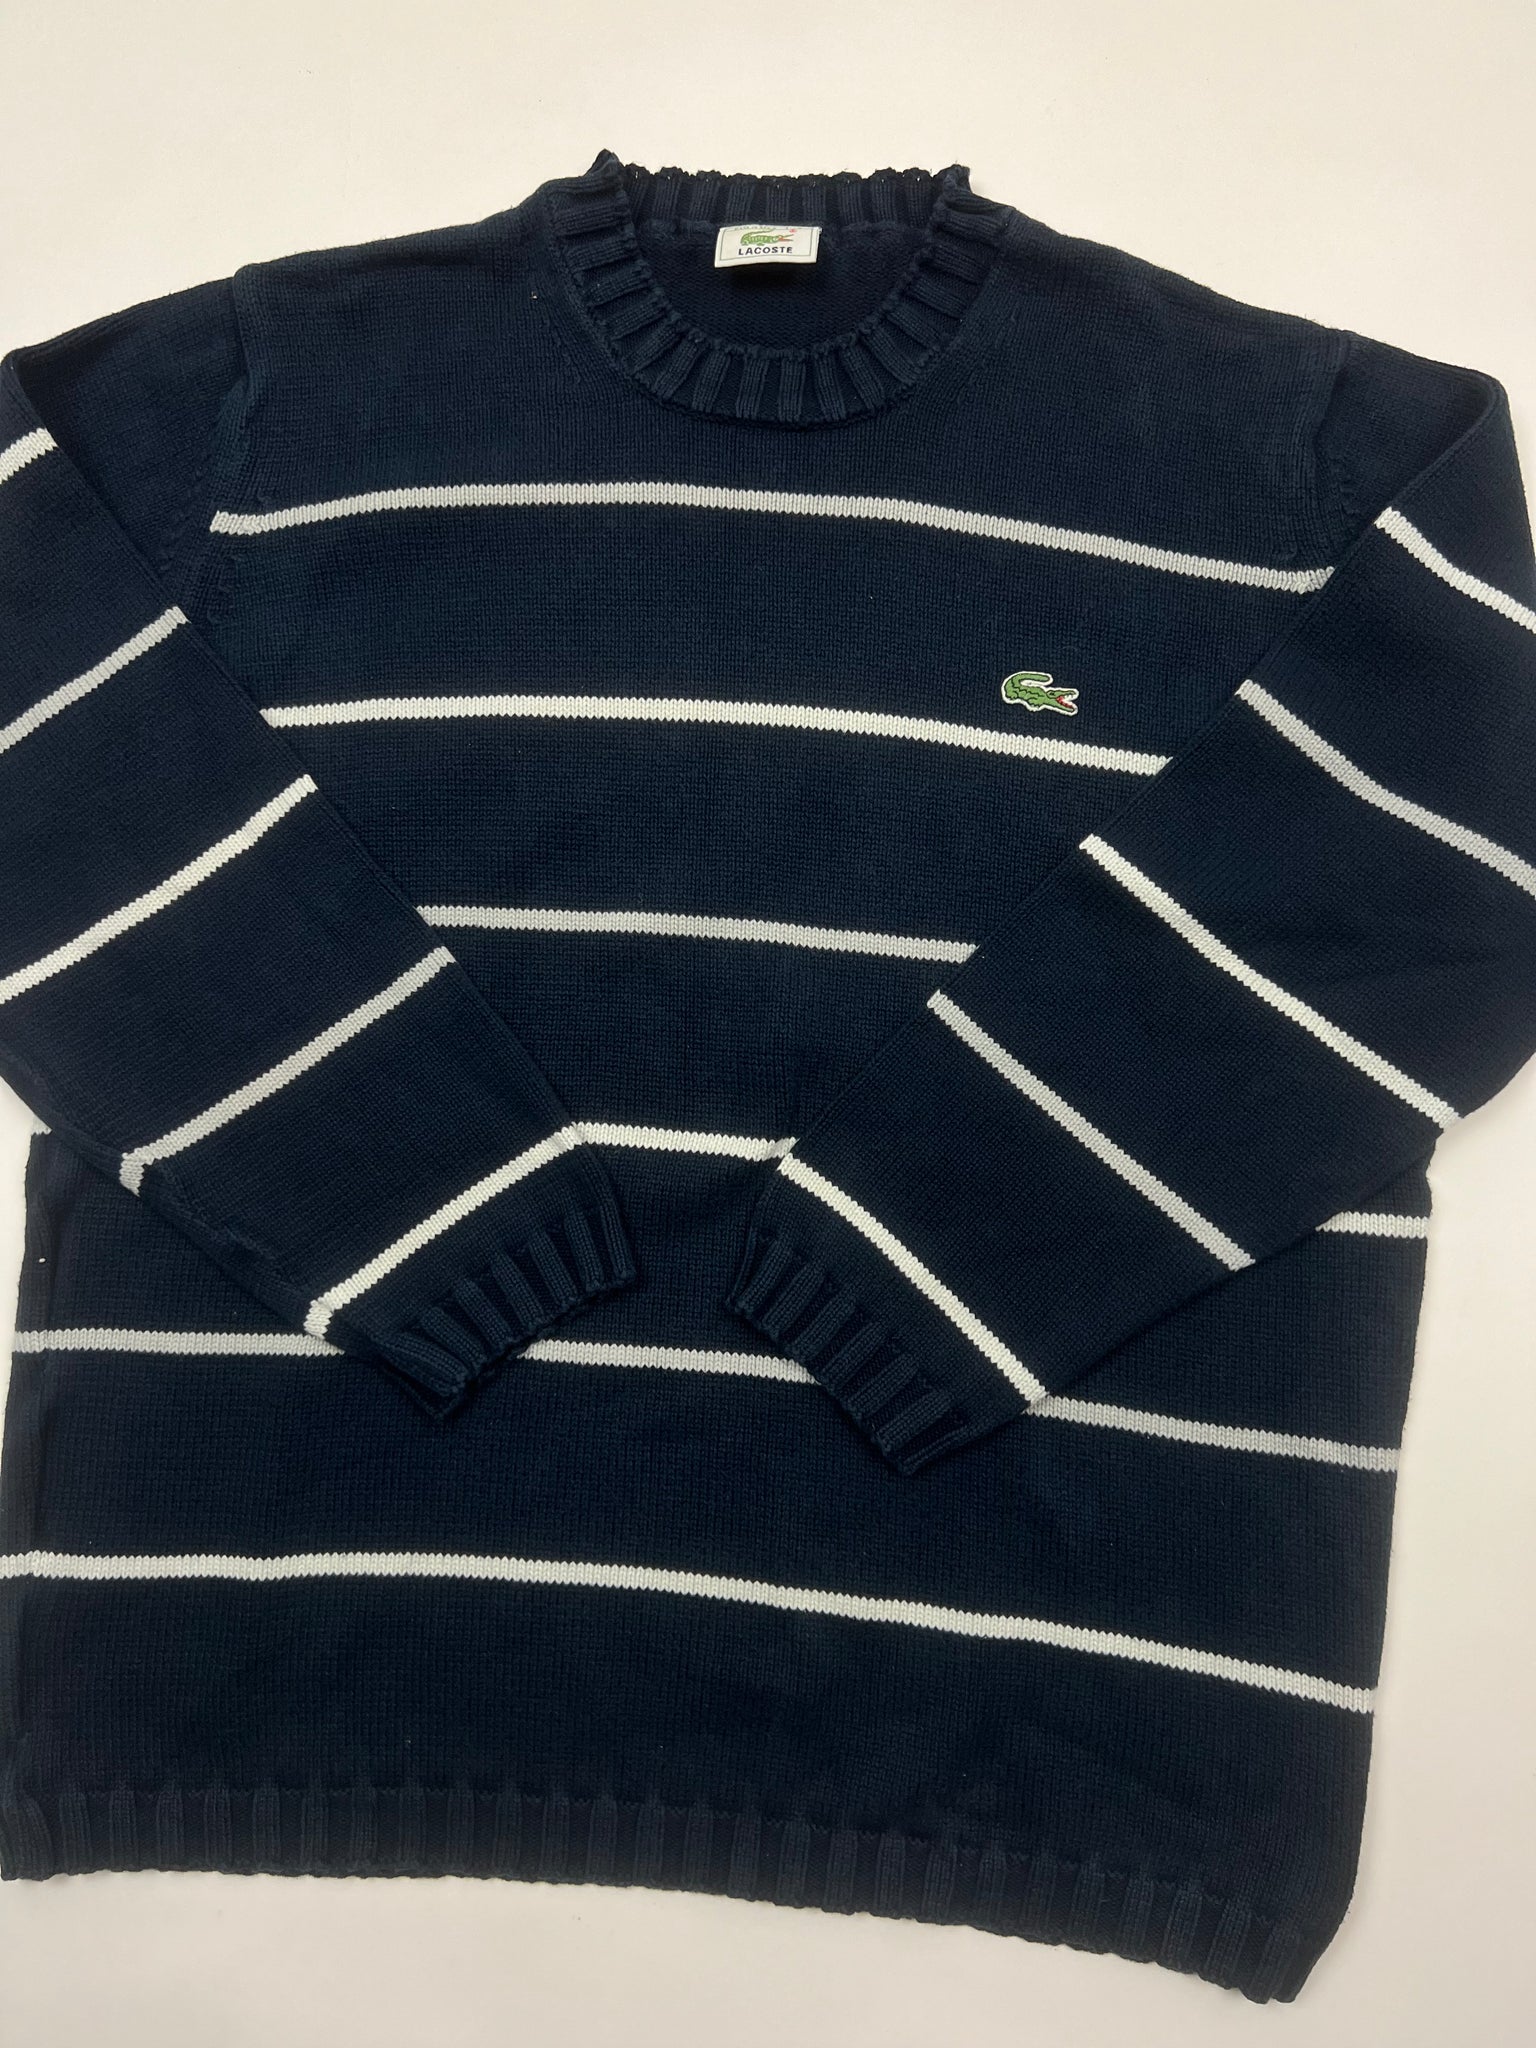 Lacoste Sweater (XL)